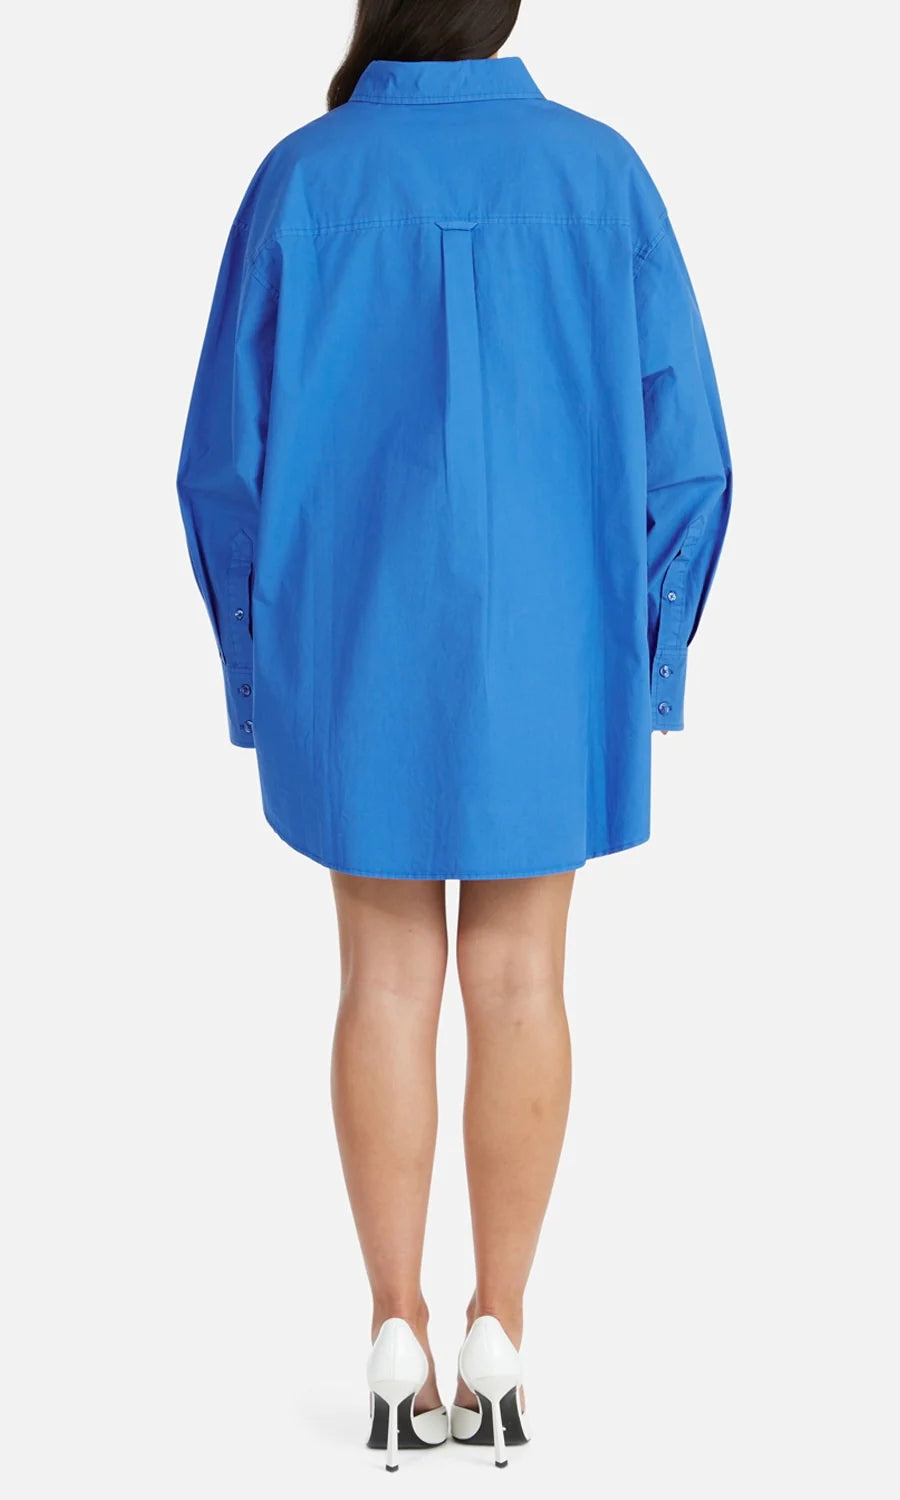 Ena Pelly - Alycia Shirt Dress - Dazzling Blue